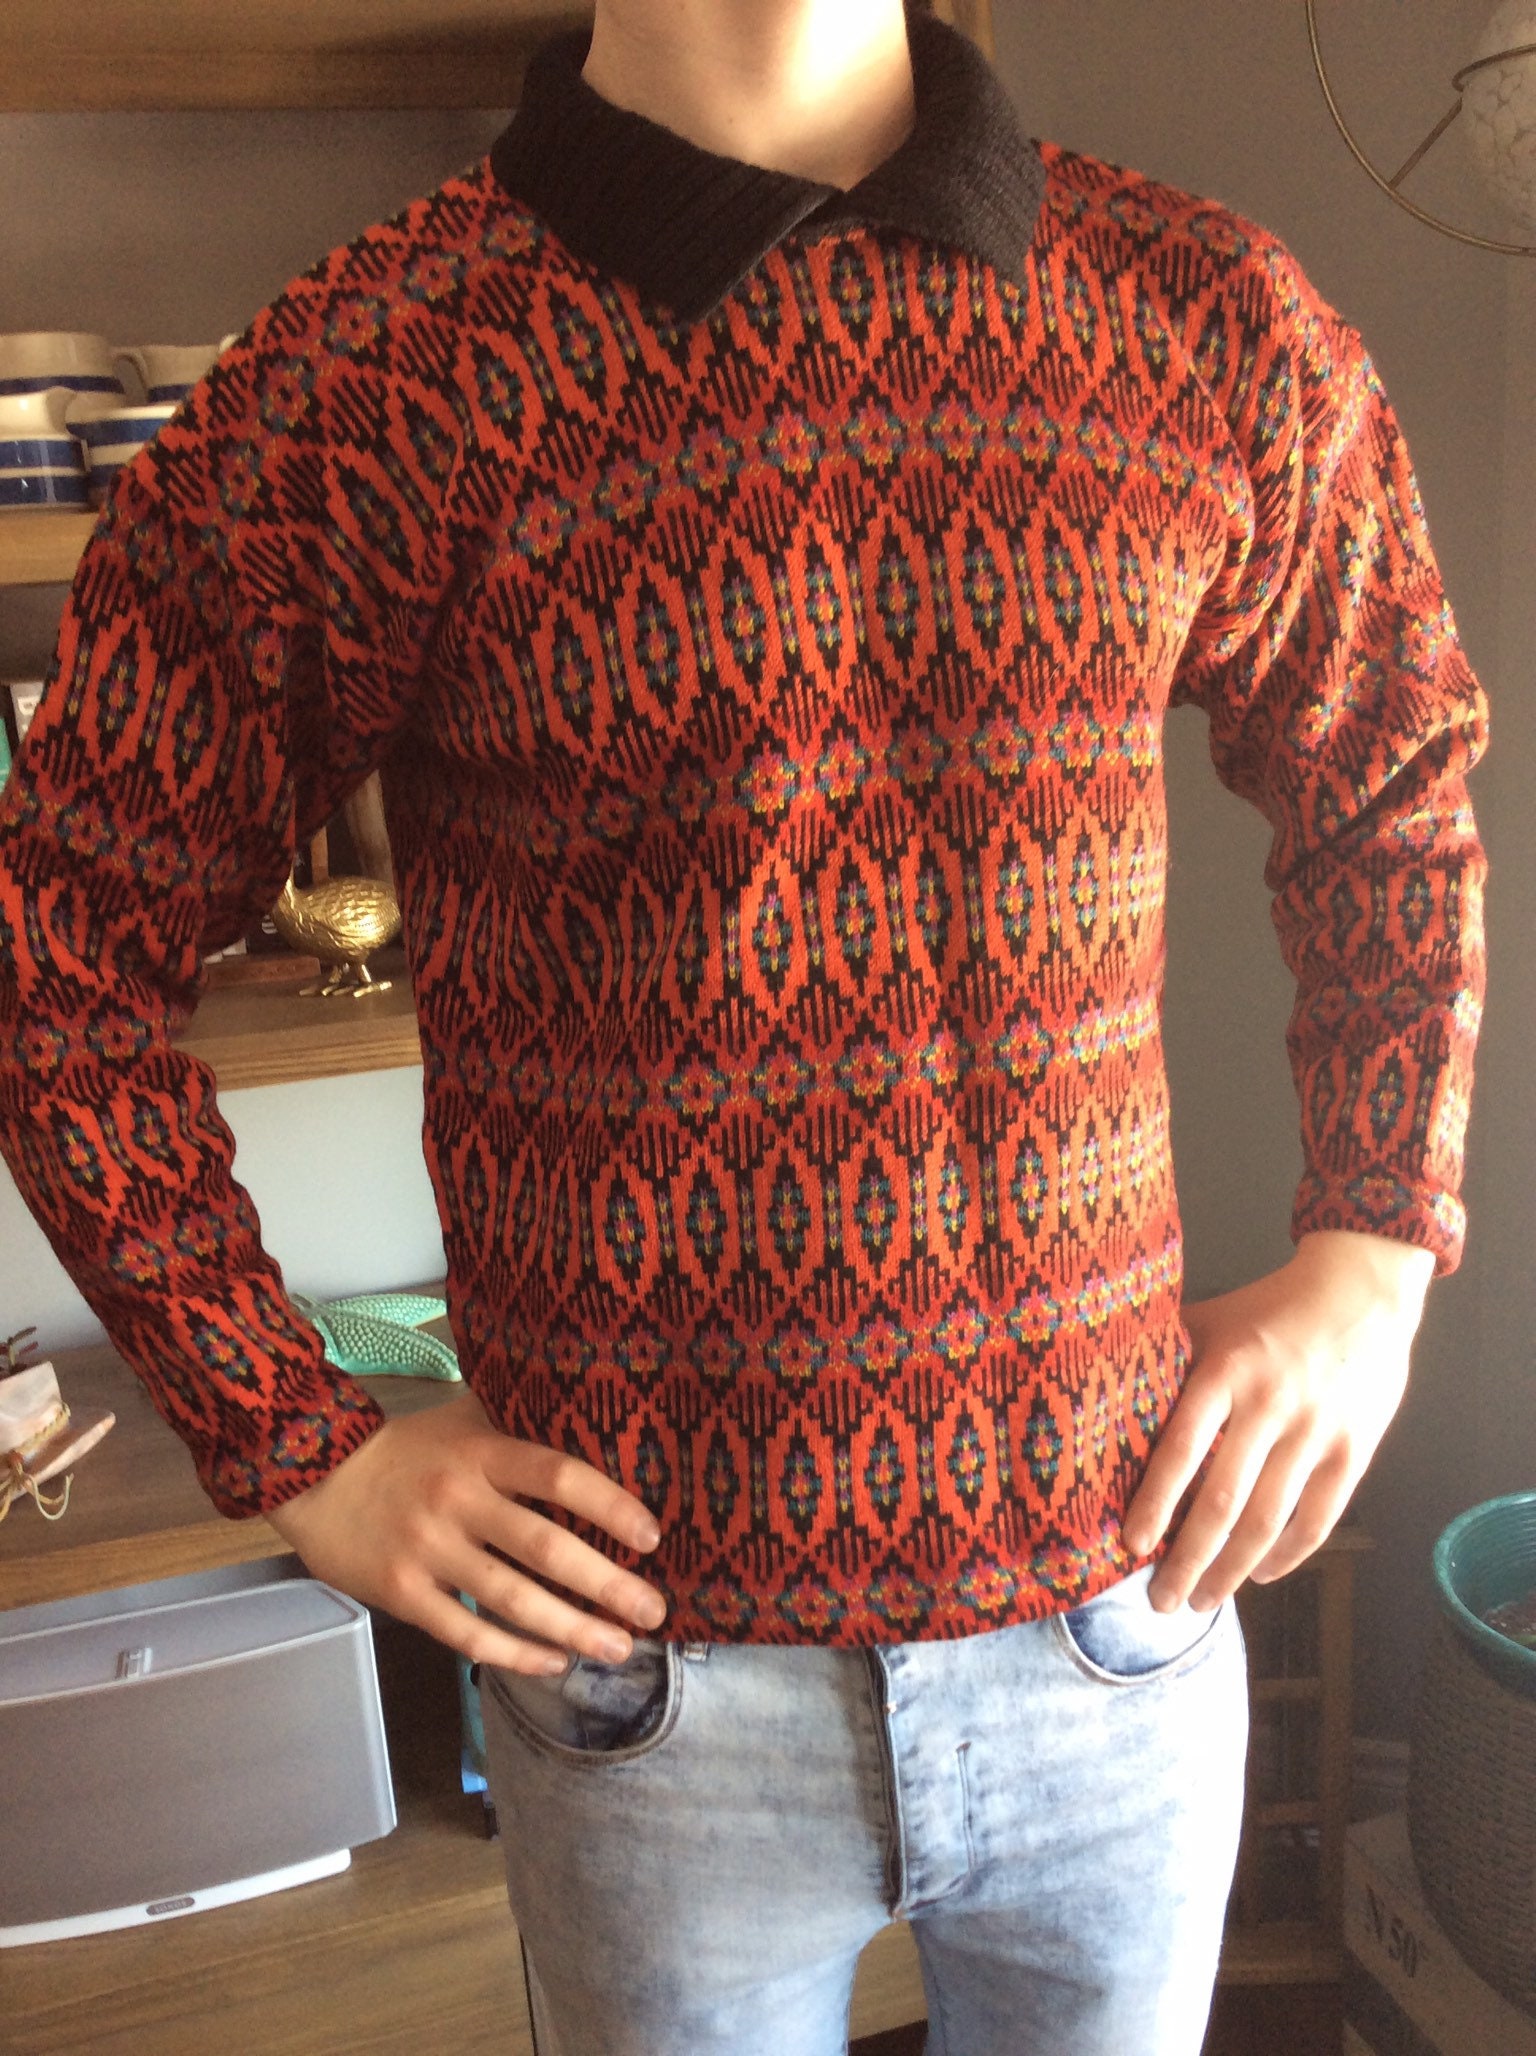 Figgjo Norwegian wool sweater pretty colorful Made in | Etsy